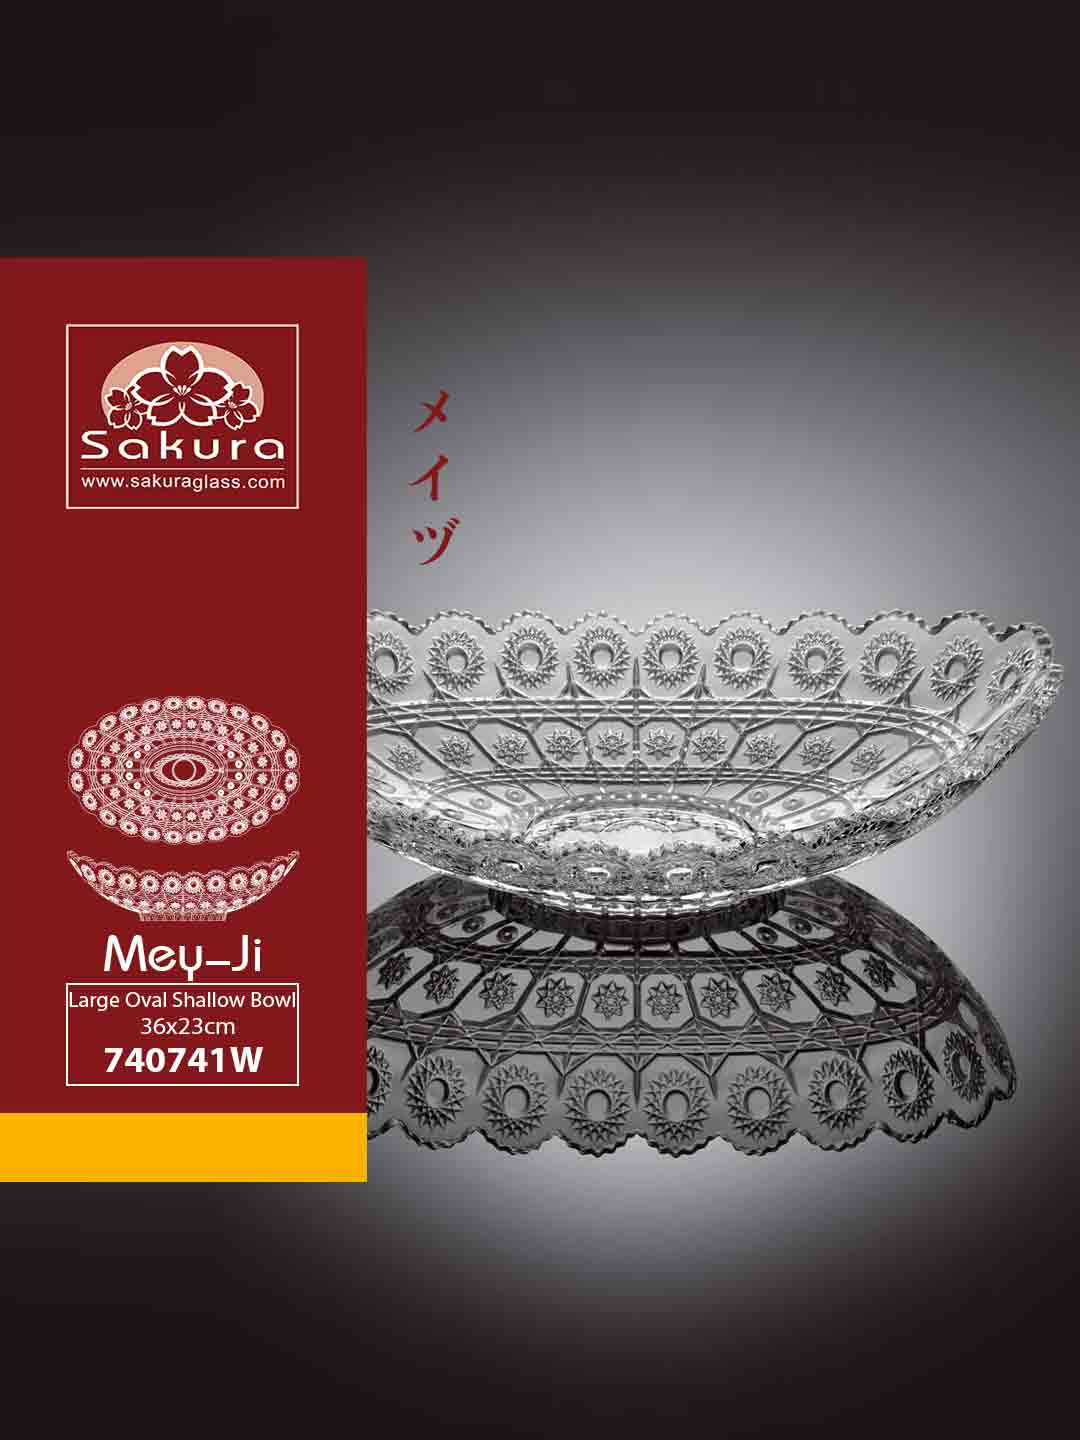 Sakura Product Mey Ji Large Oval Shallow Bowl 36x23cm 740741W